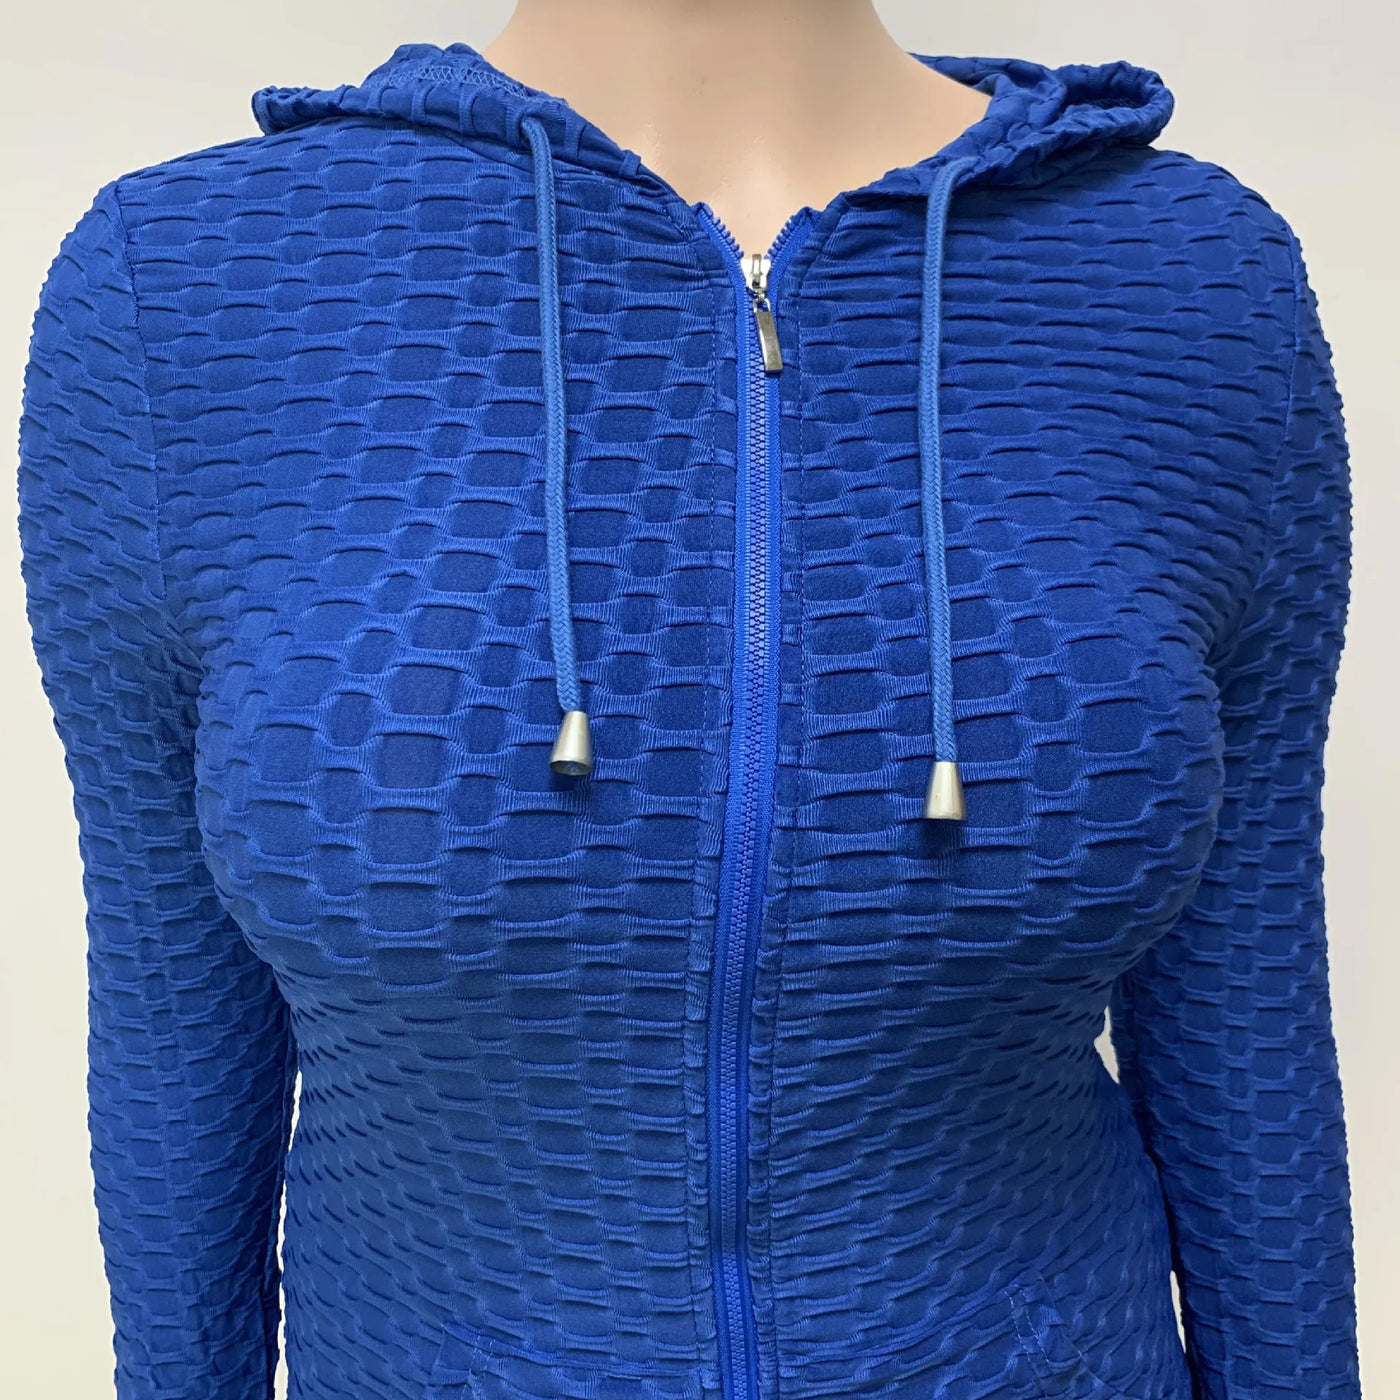 Plus Size Clothing XL-5XL two Piece Set Women tracksuit Sweatshirt Sweatpants joggers Winter Outfit Wholesale Dropshipping 2020